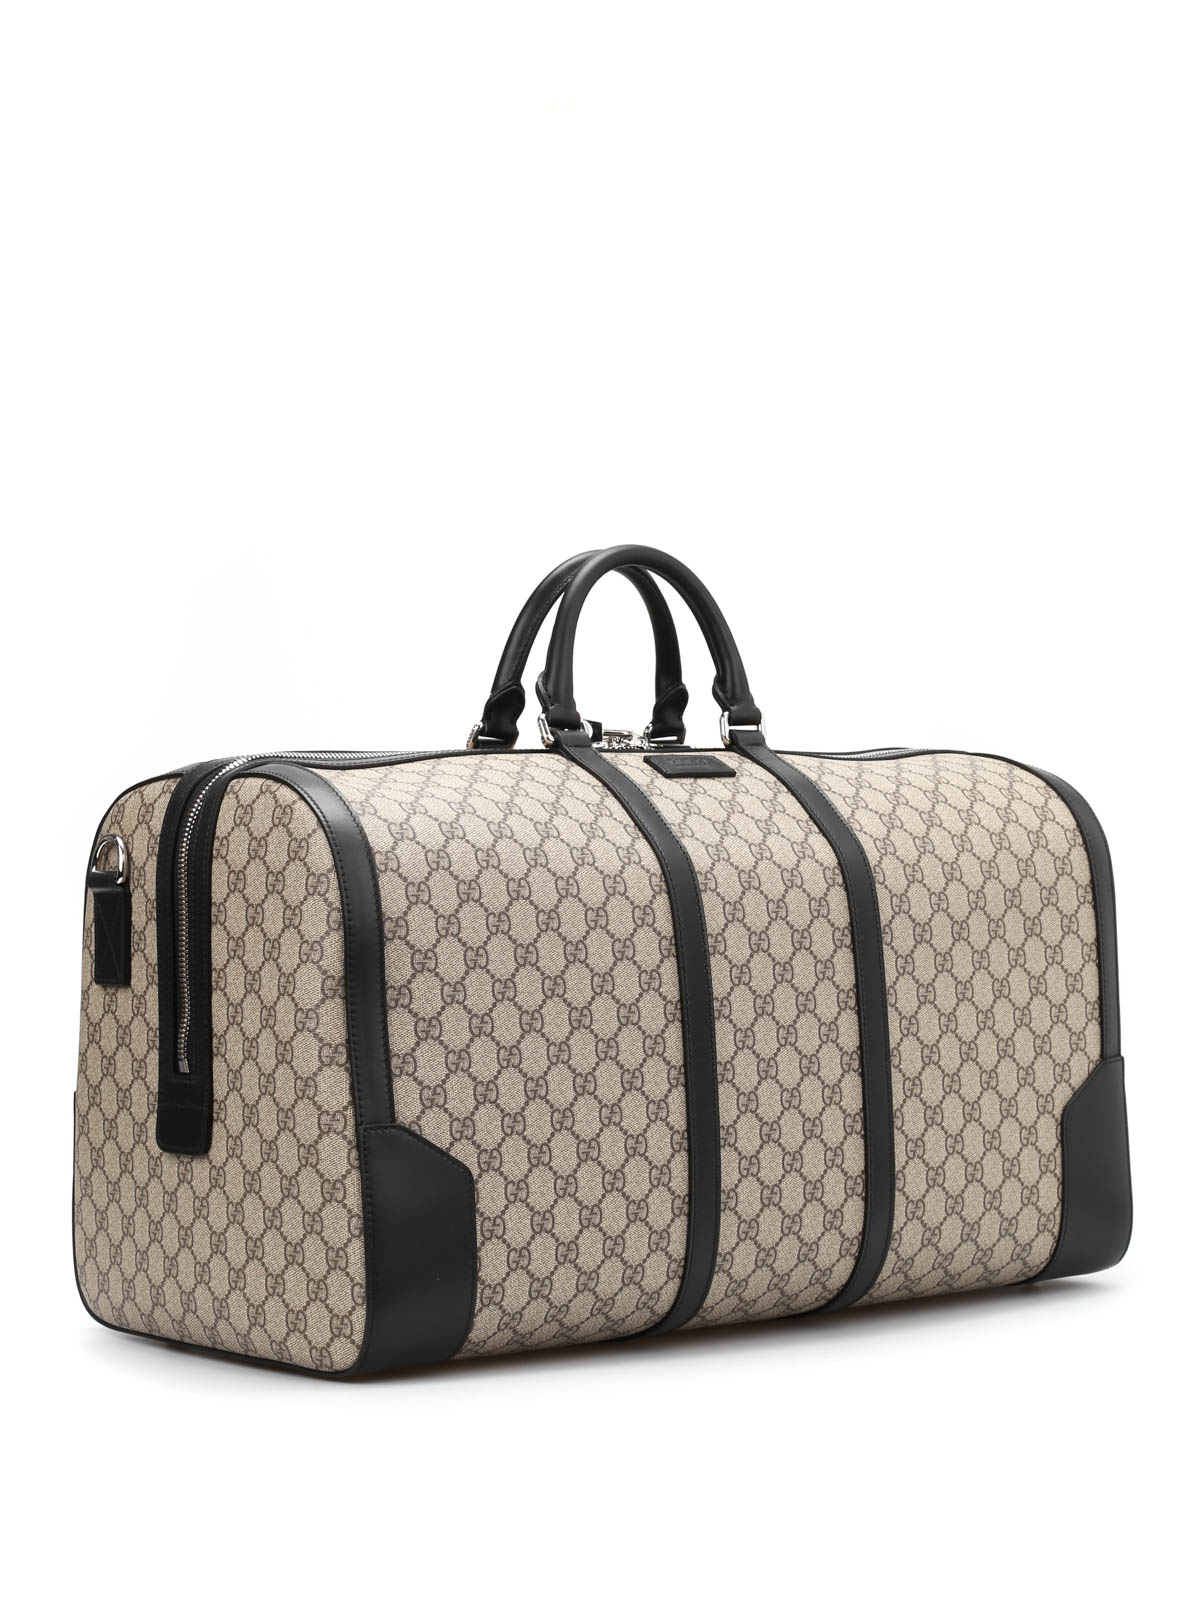 Gucci - GG Supreme duffle - Luggage 